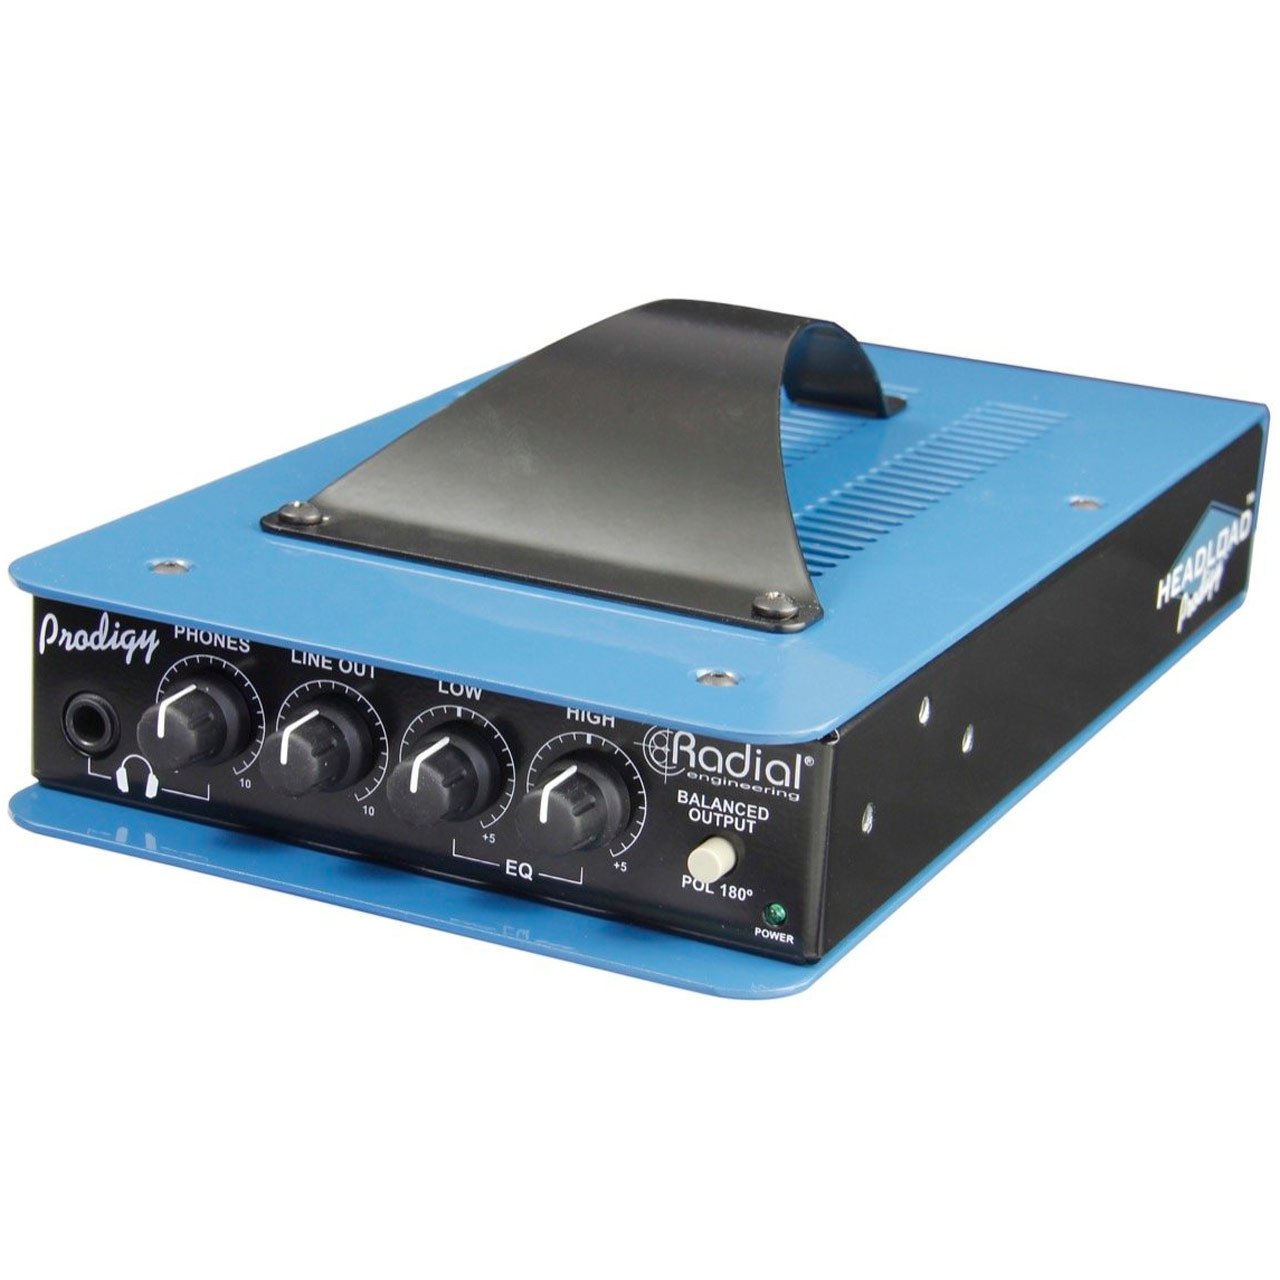 Guitar Accessories - Radial Headload Prodigy Combination Load Box And DI